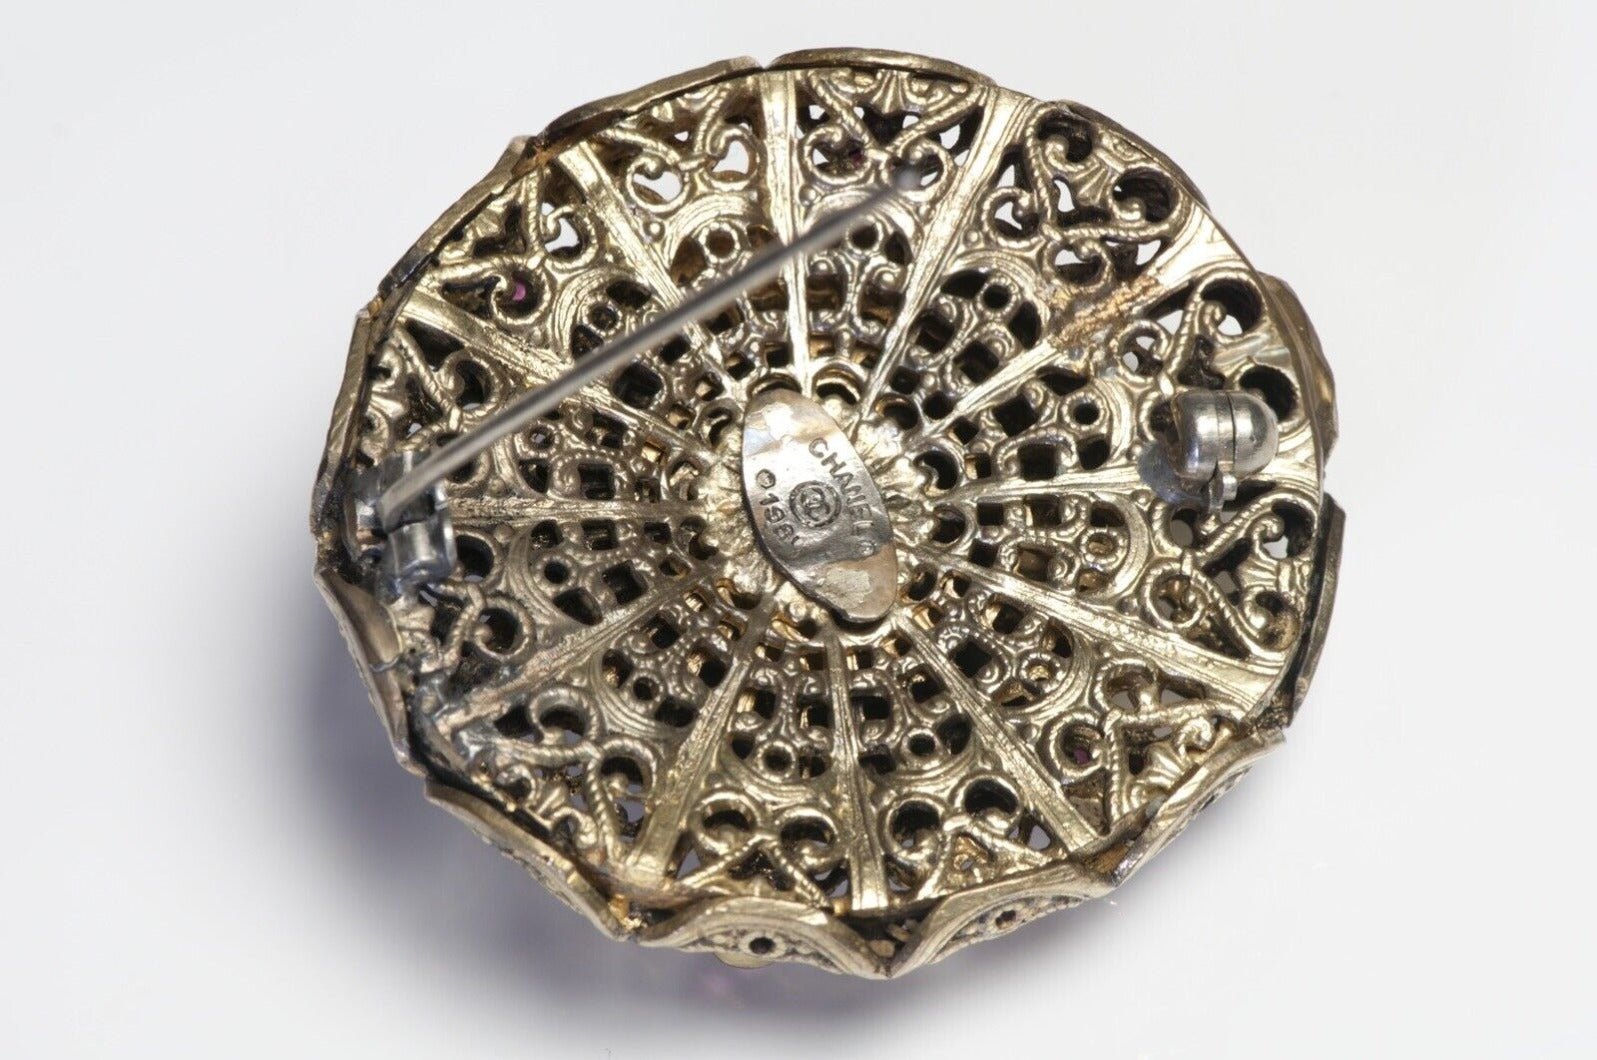 CHANEL Paris 1984 Byzantine Style Maison Gripoix Glass Brooch - DSF Antique Jewelry